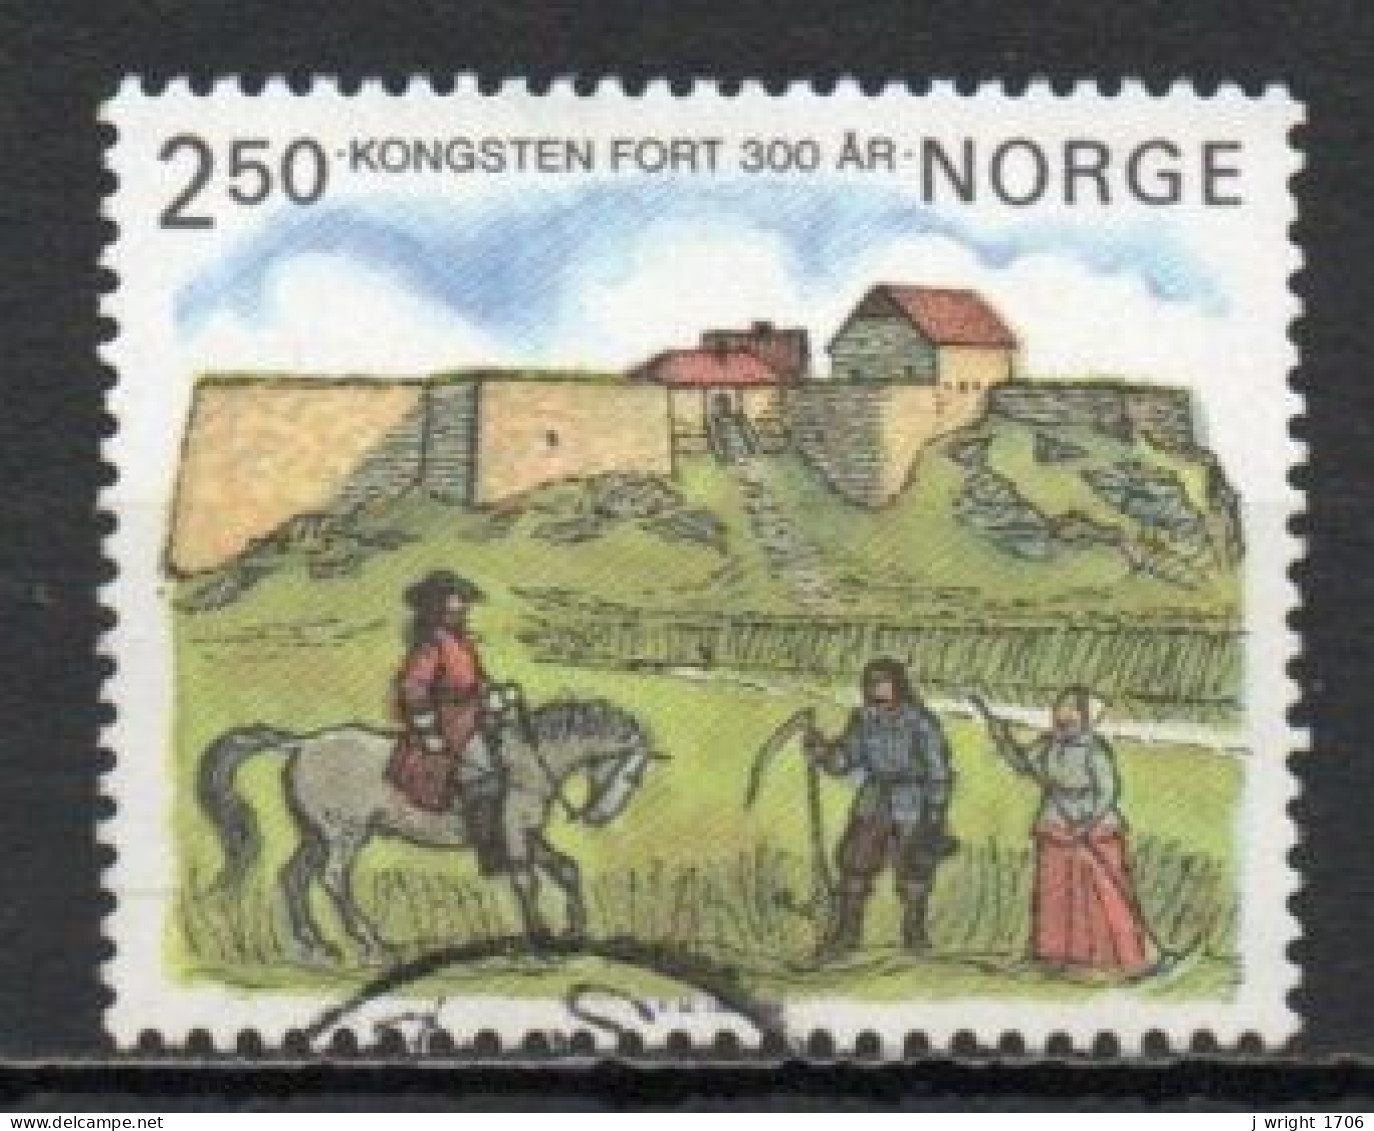 Norway, 1985, Kongsten Fort 300th Anniv, Set, USED - Usados